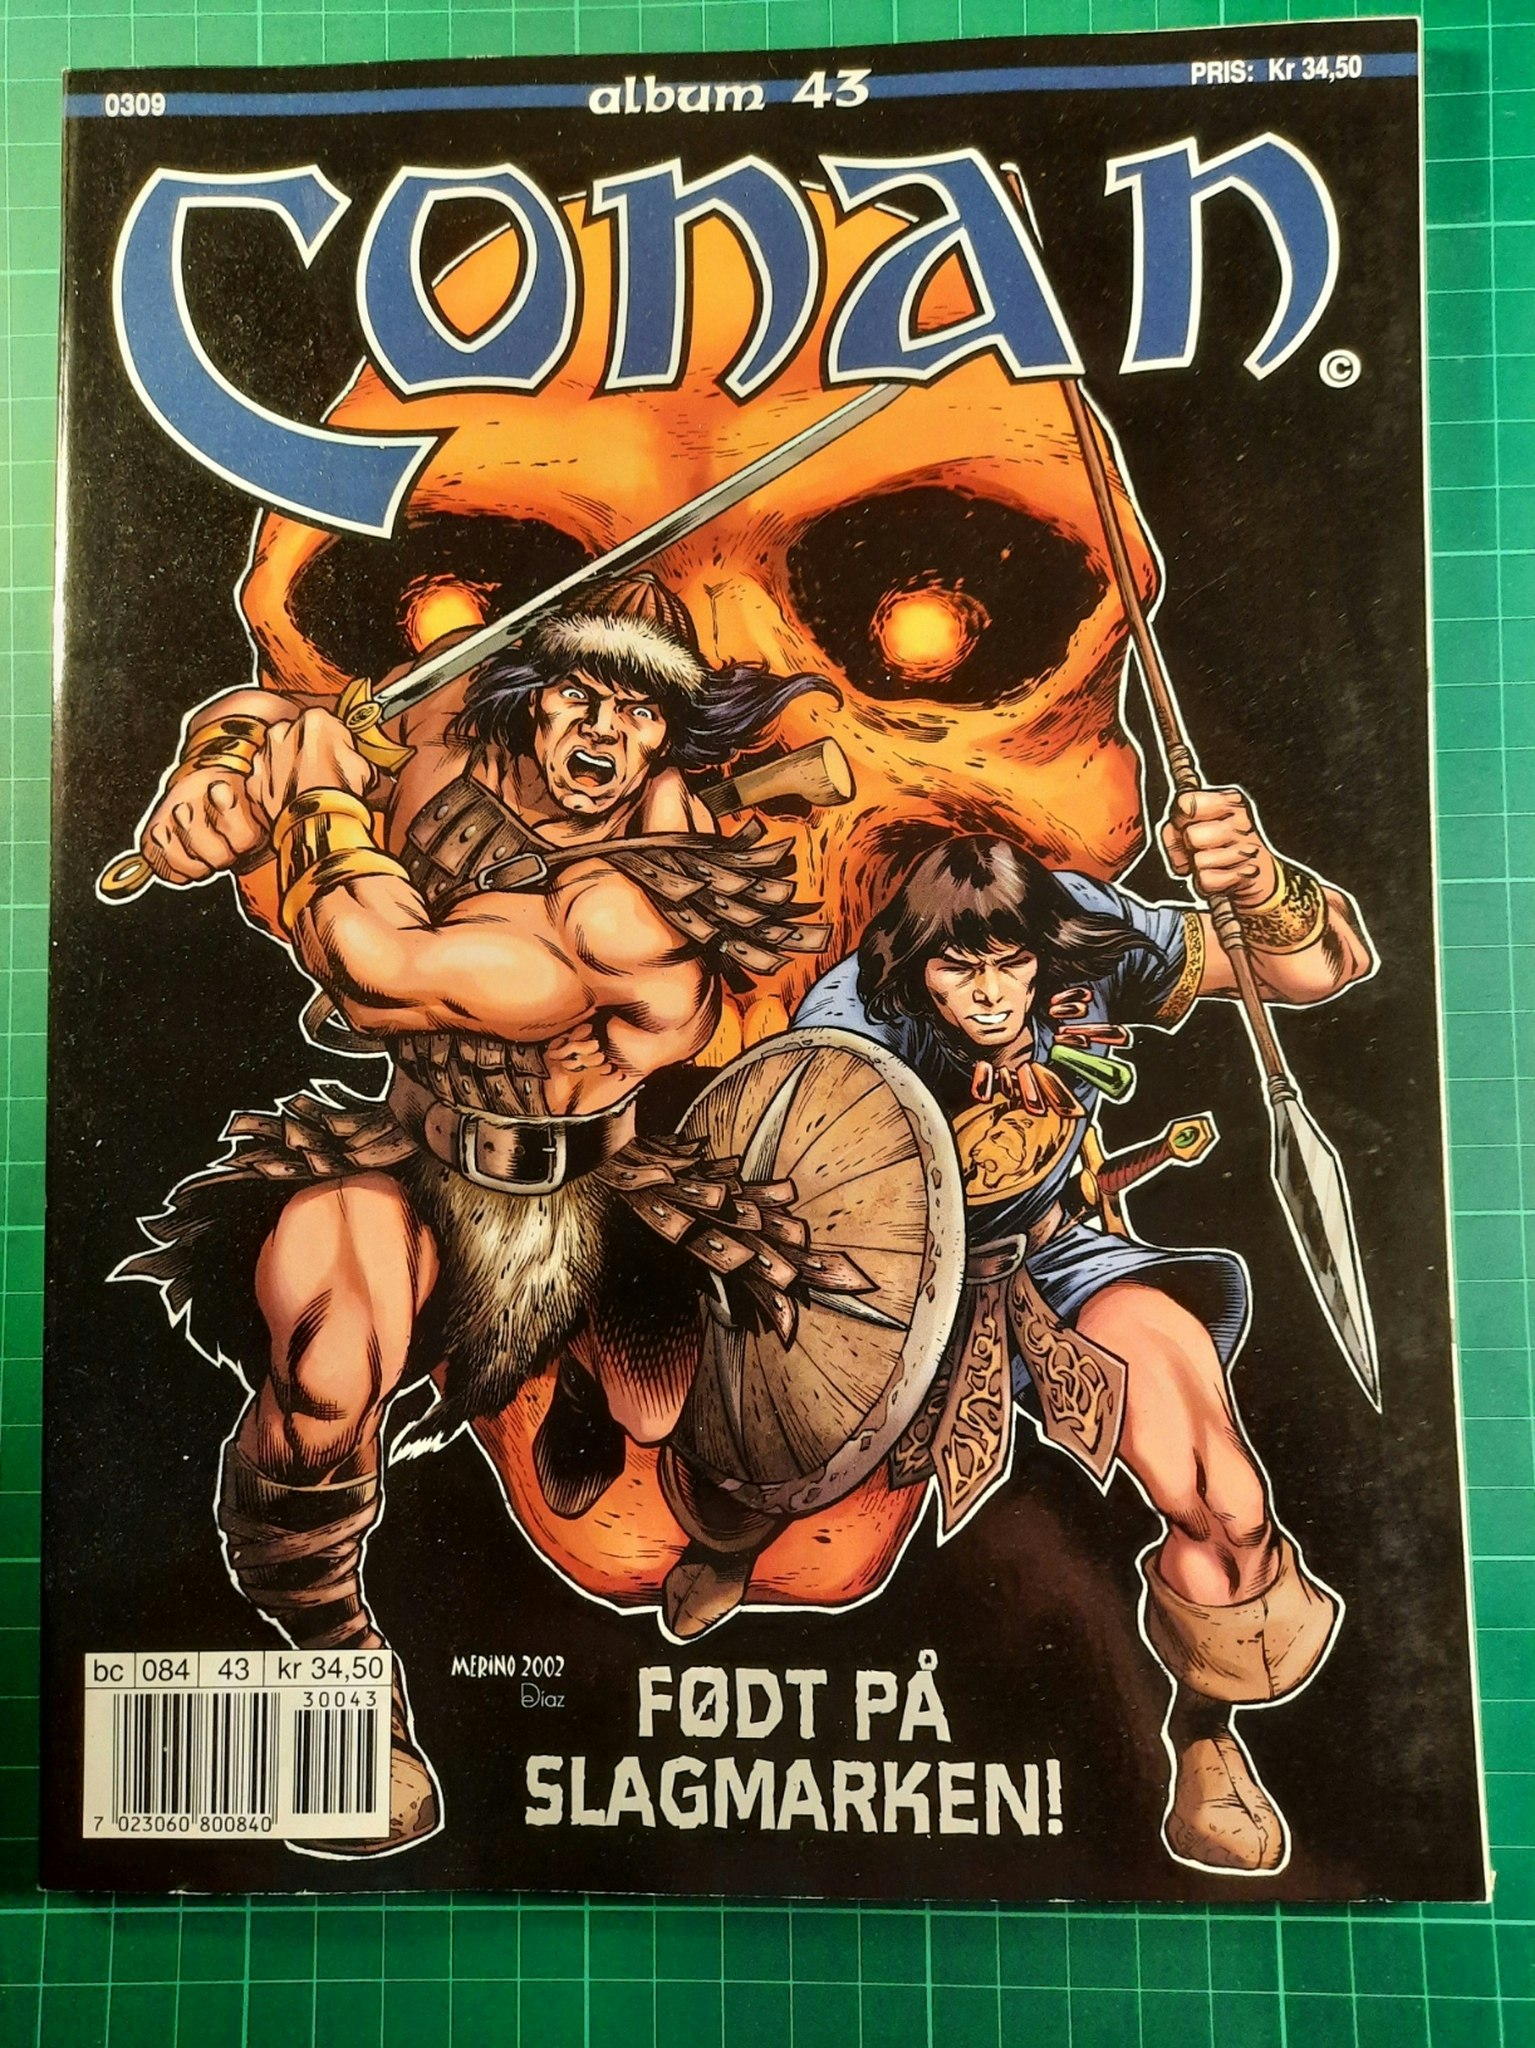 Conan album 43